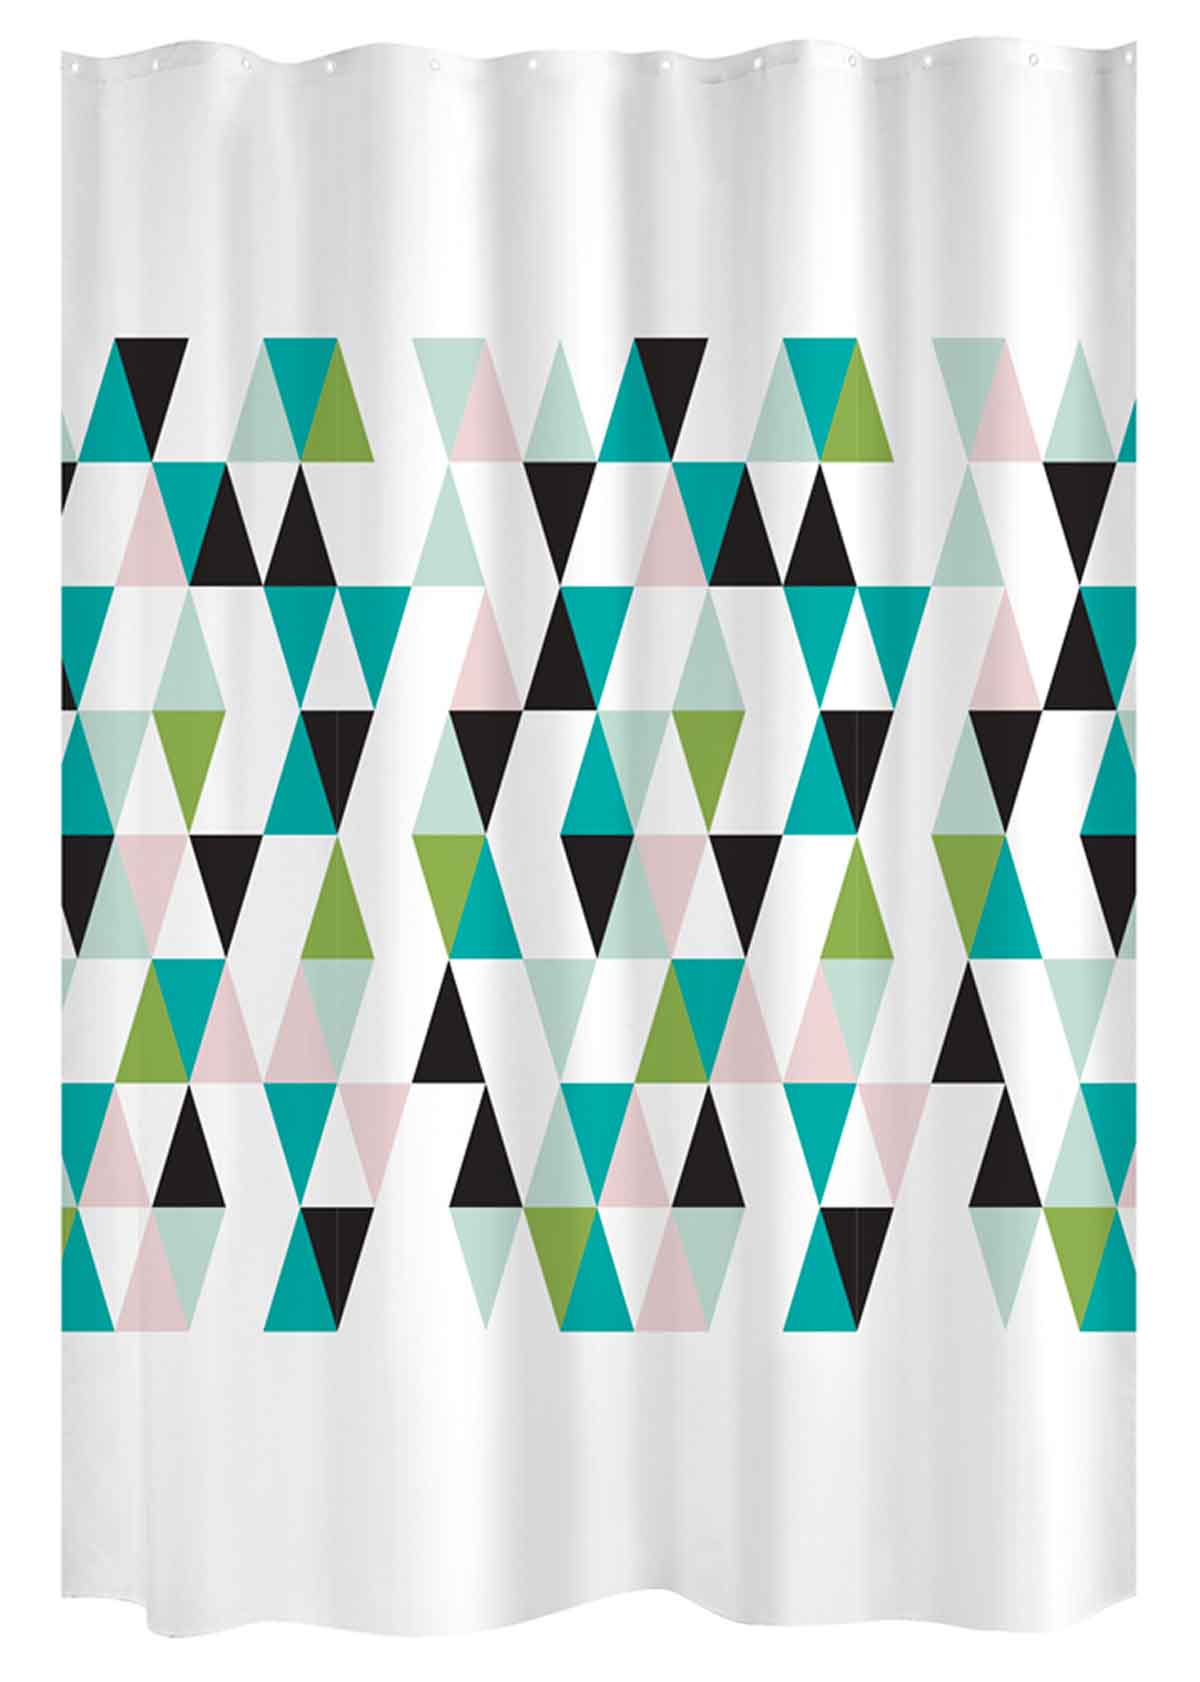 Rideau de douche tendance scandinave polyester multicolore x